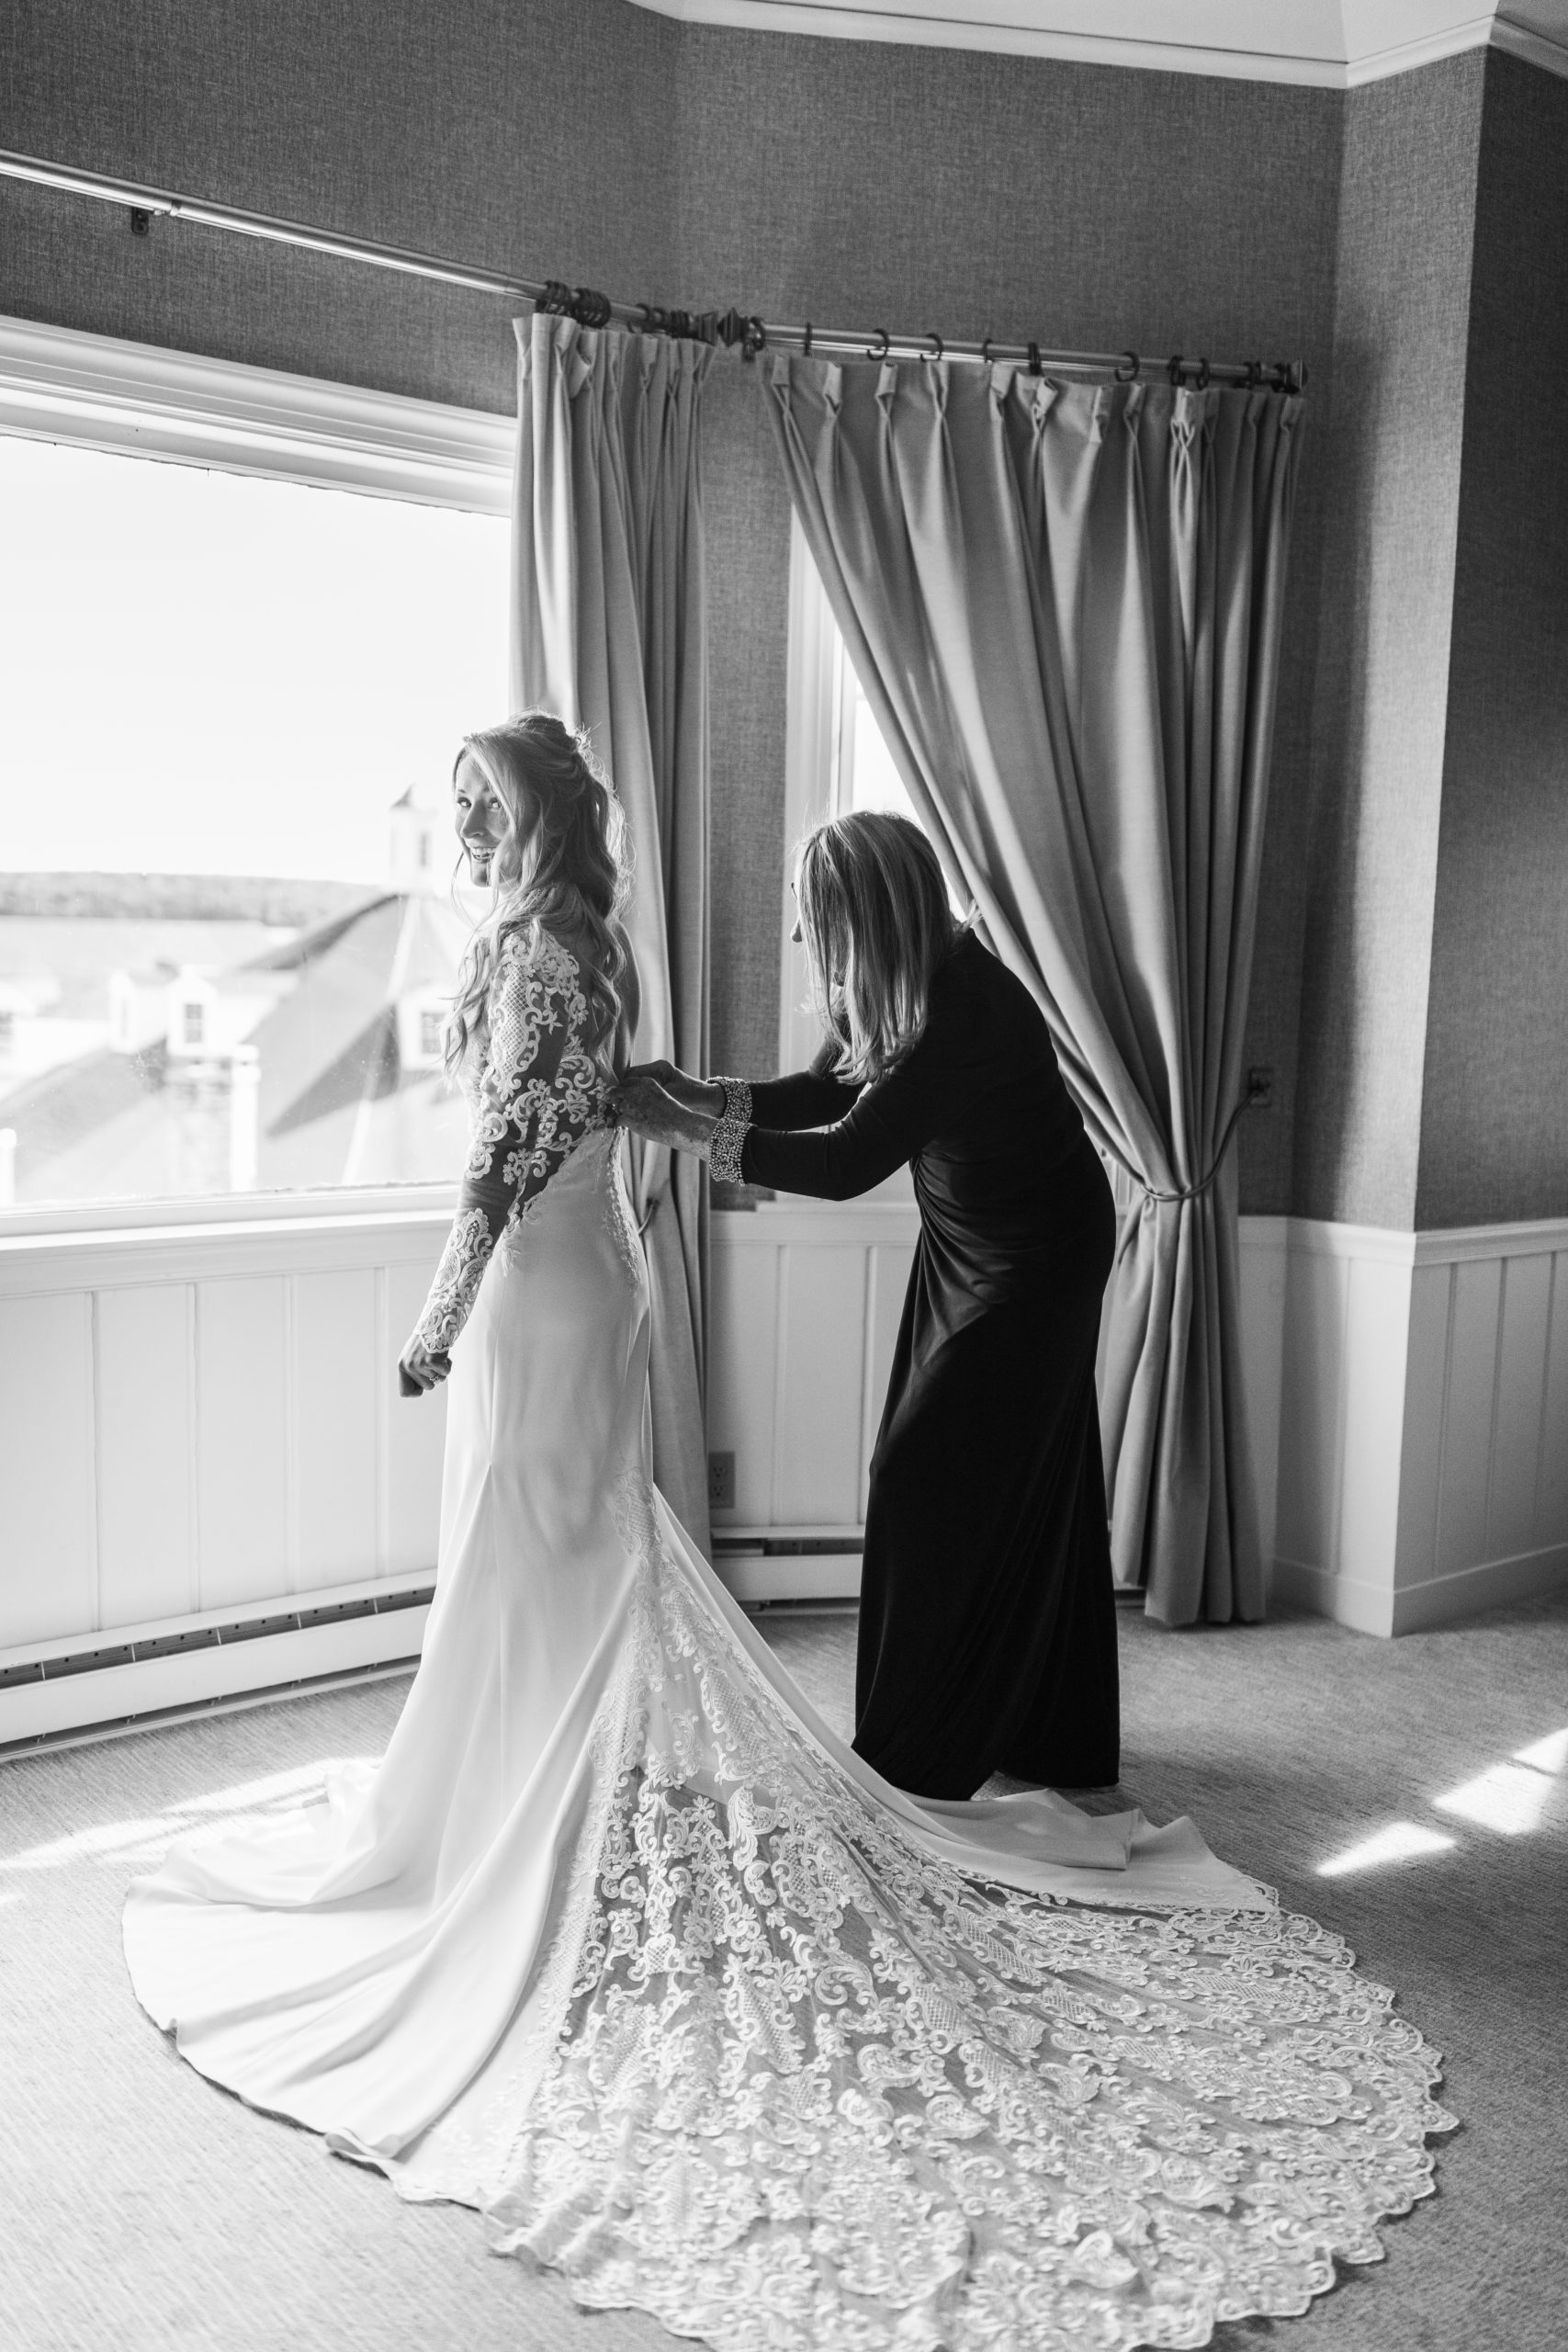 Mother helping daughter put on wedding dress